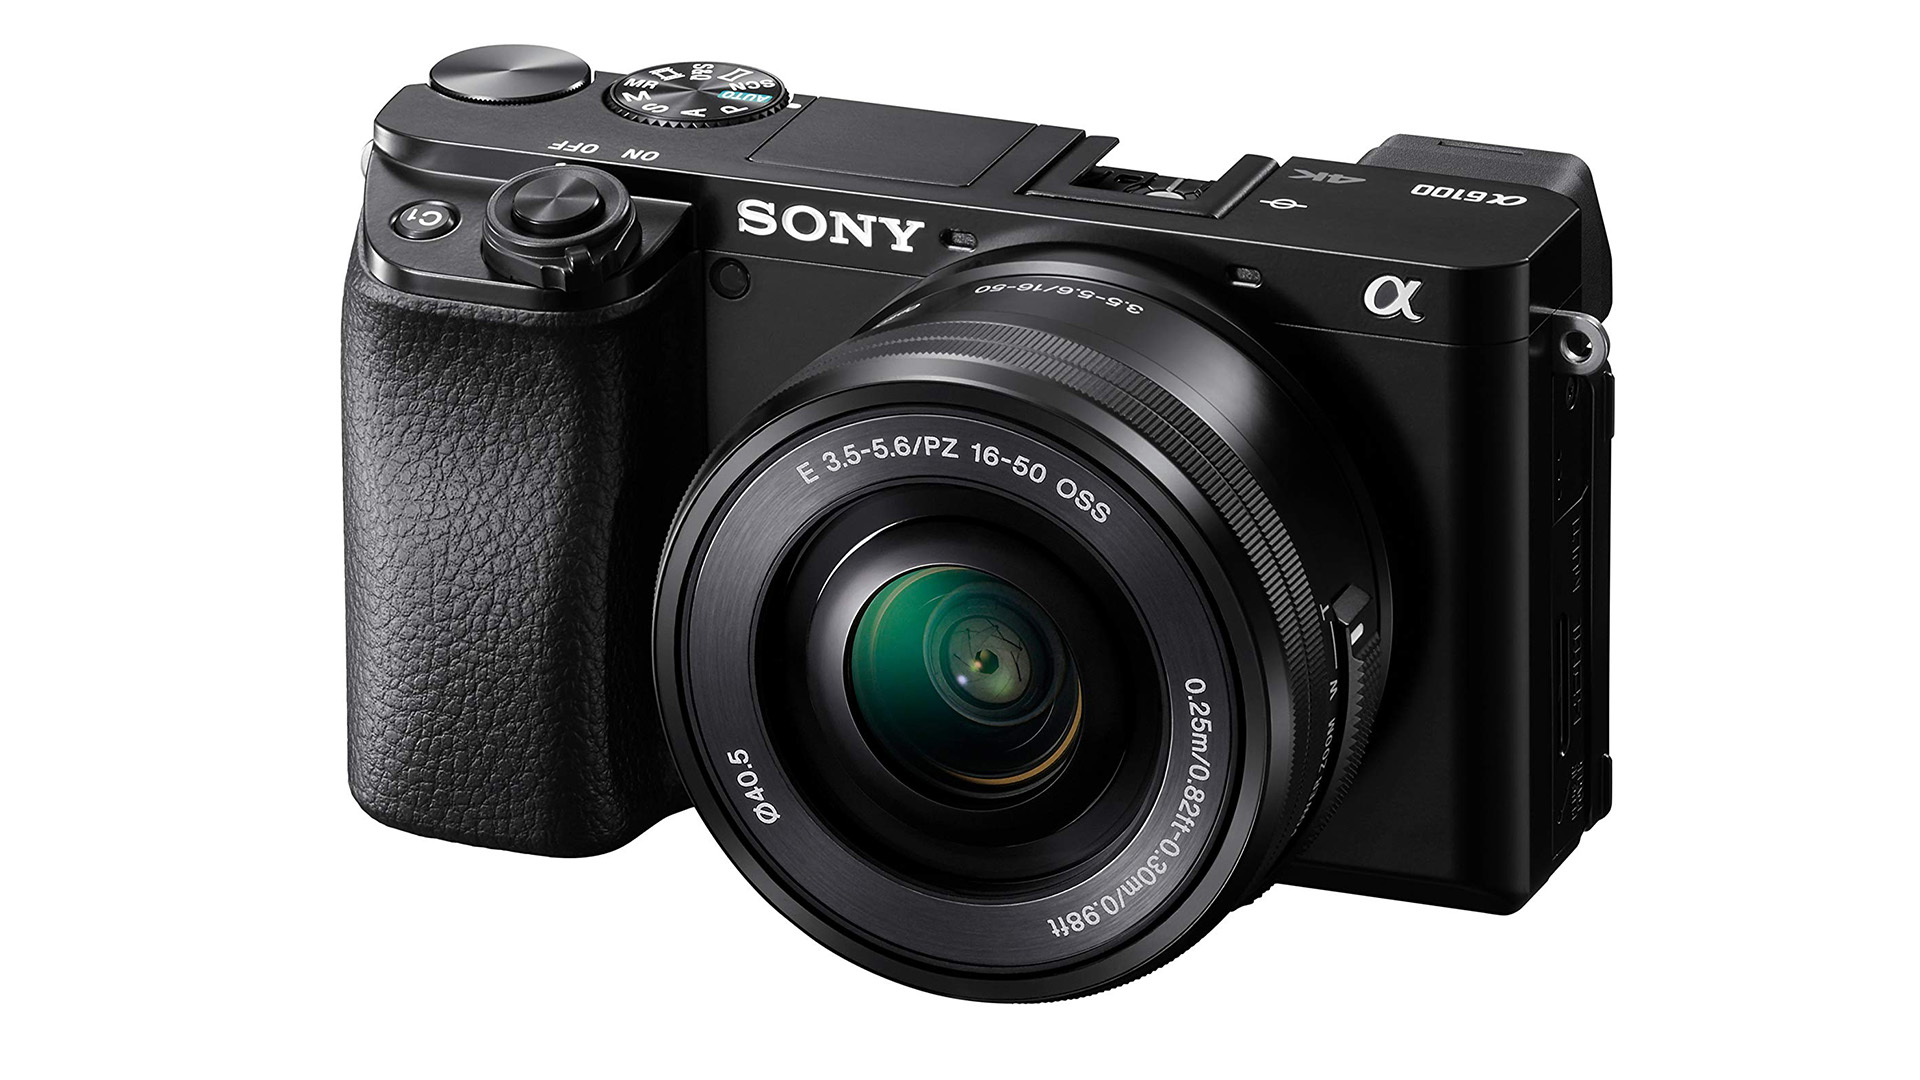 The Sony A6100 camera body